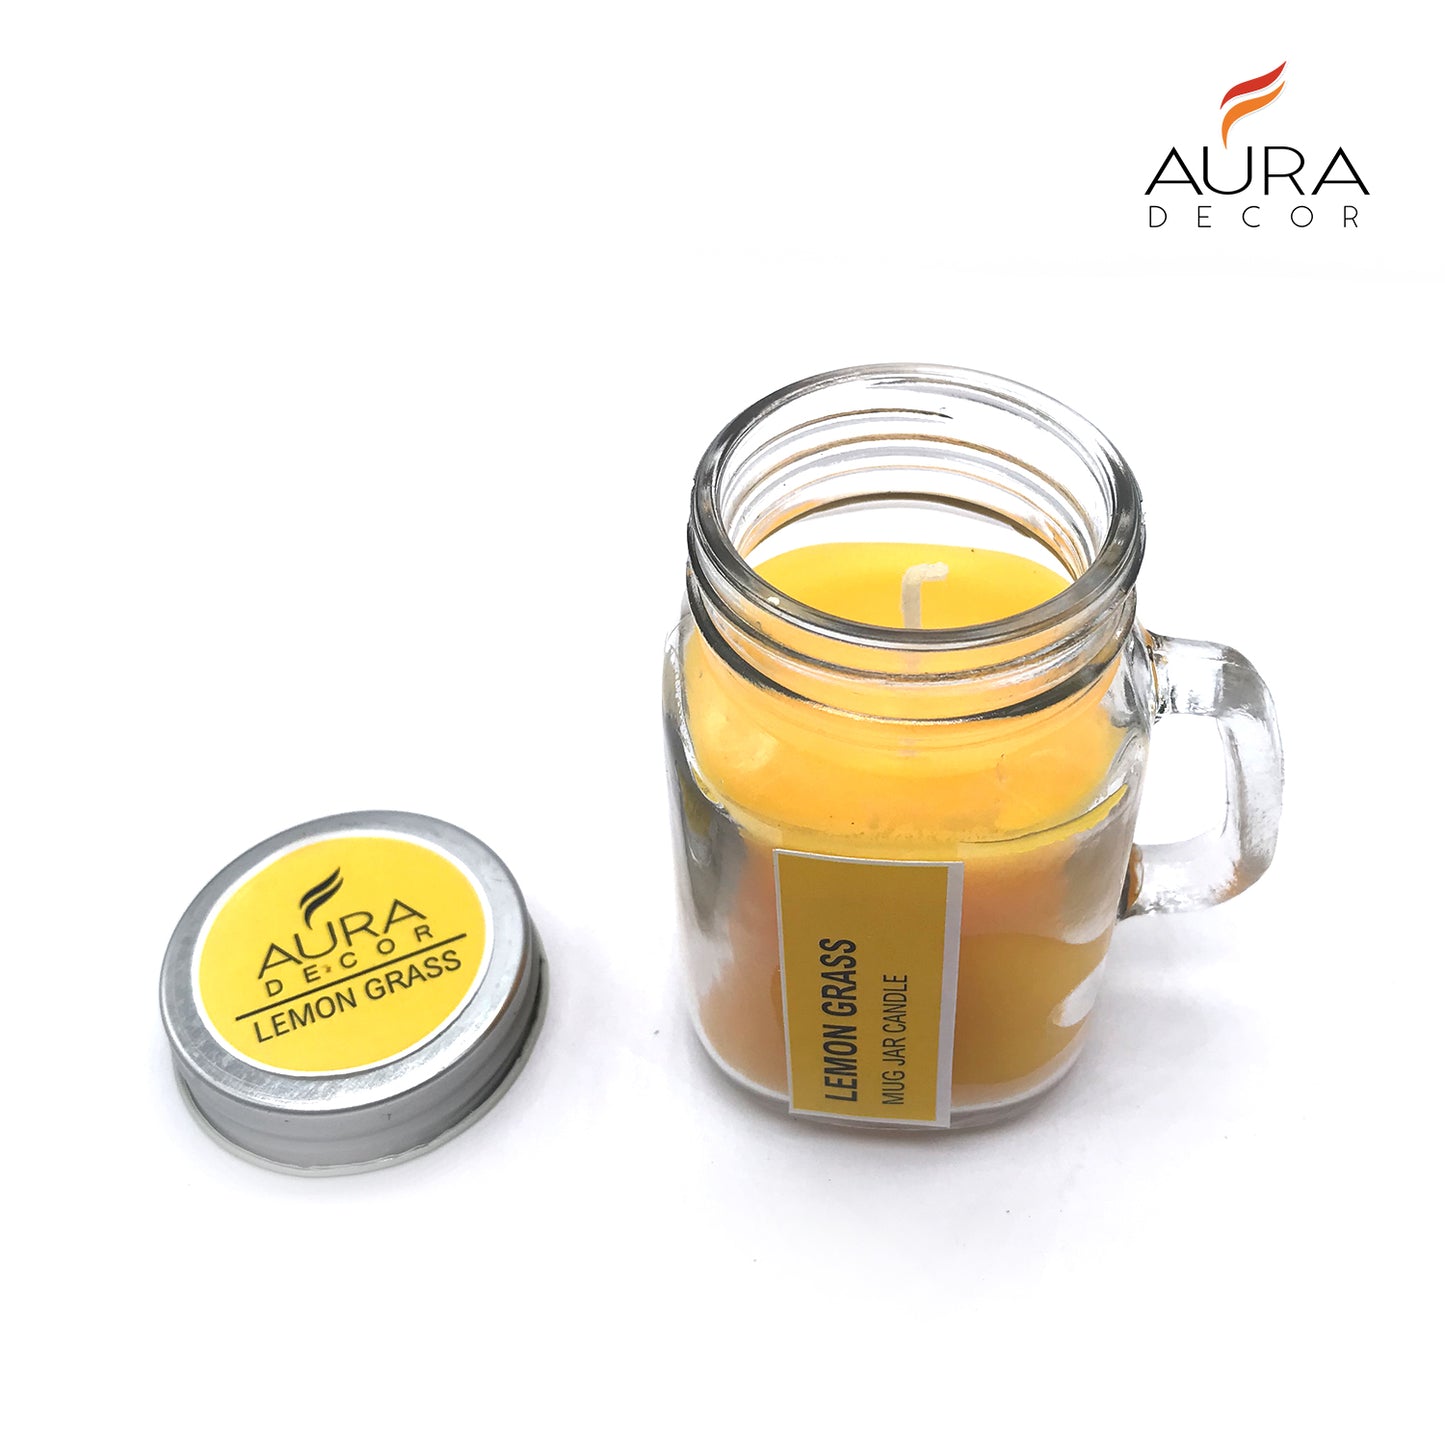 AuraDecor Mug Jar Candle ( Lemon Grass Fragrance )